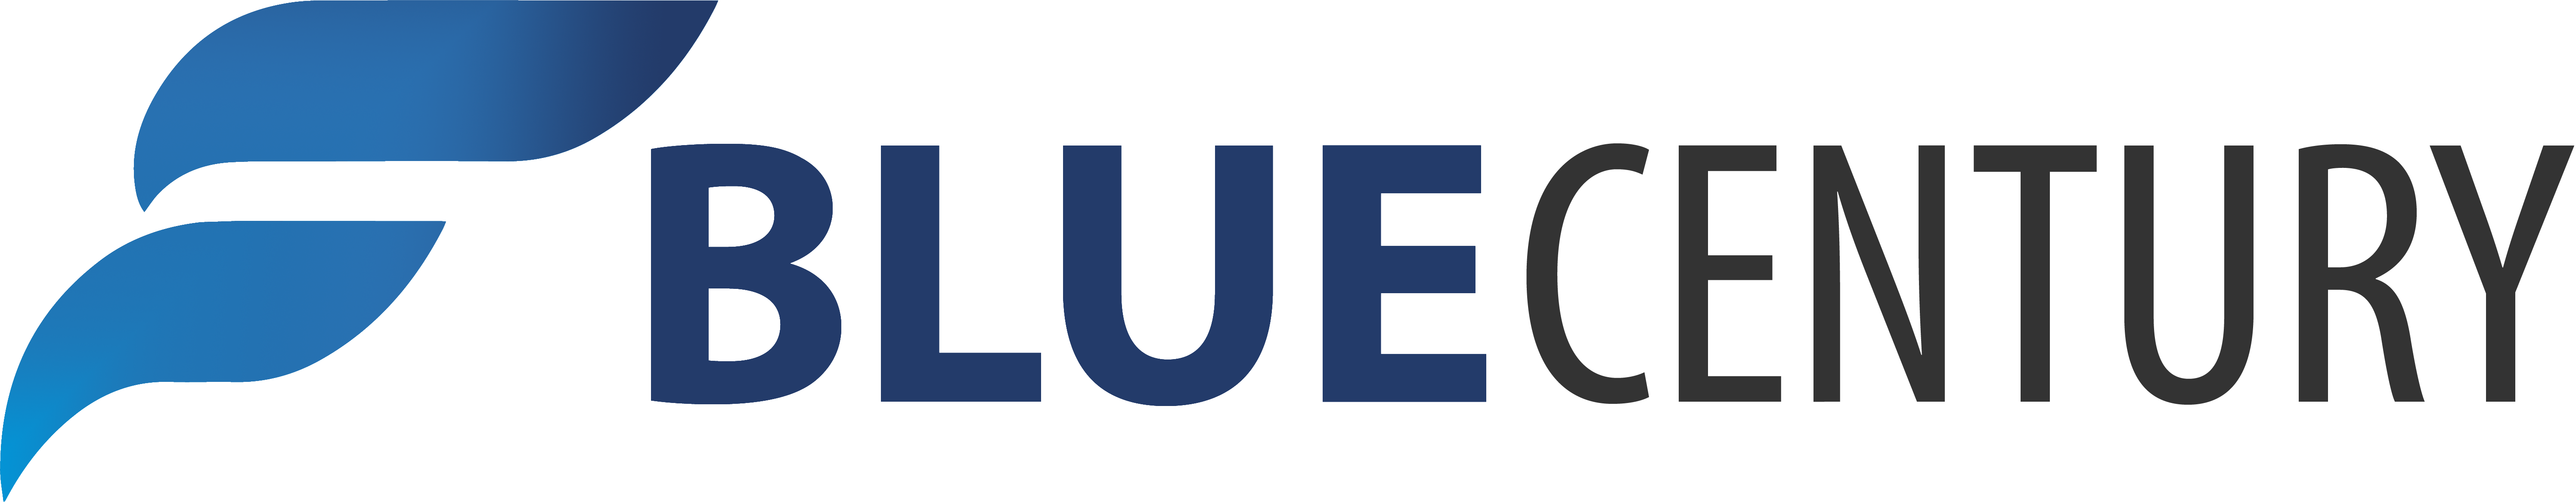 Blue Century logo